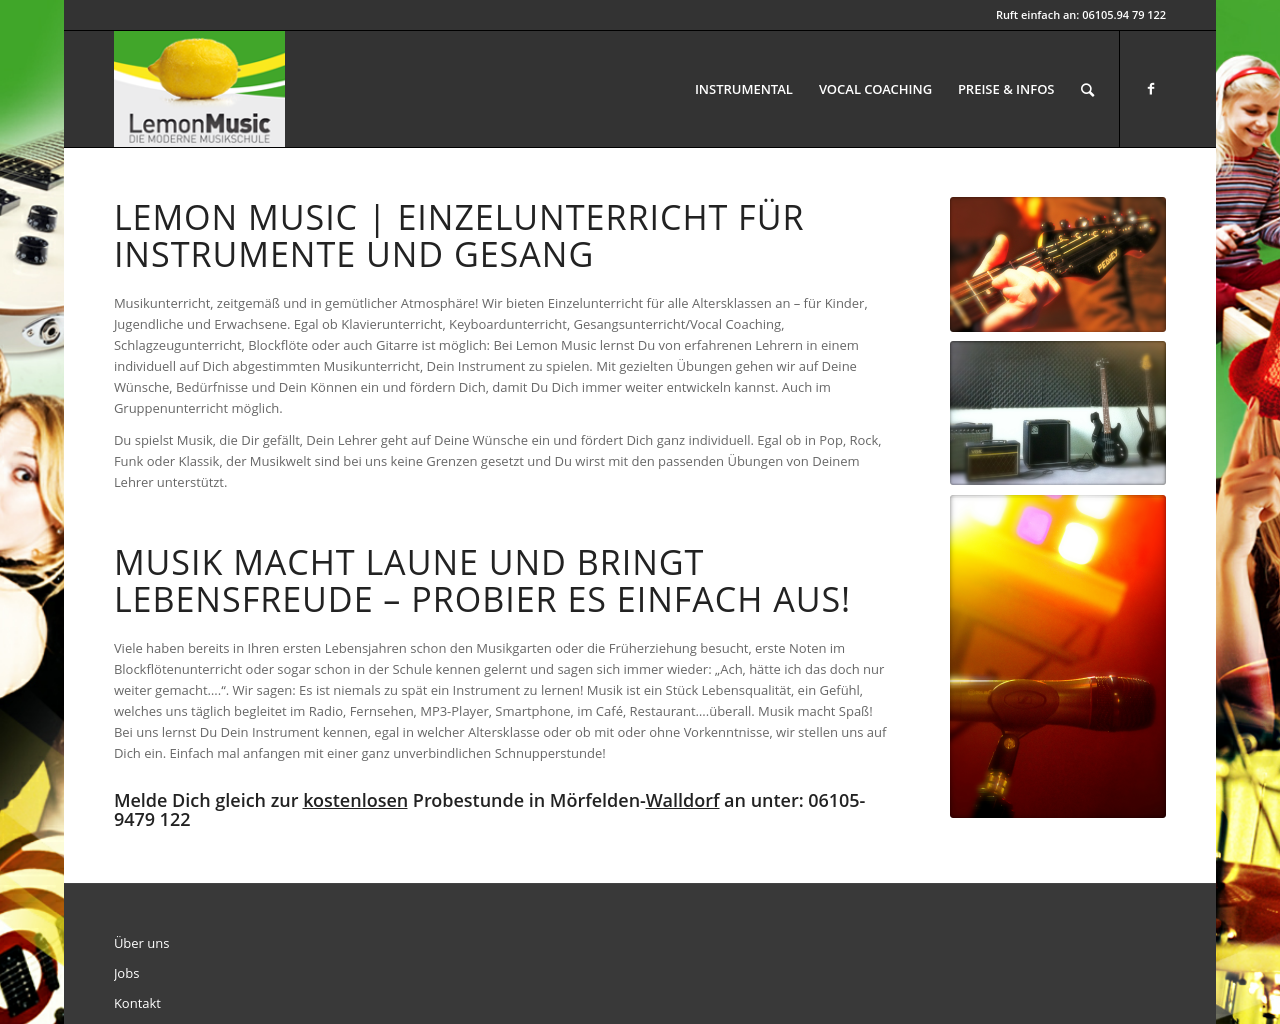 Bild Website lemonmusic.de in 1280x1024